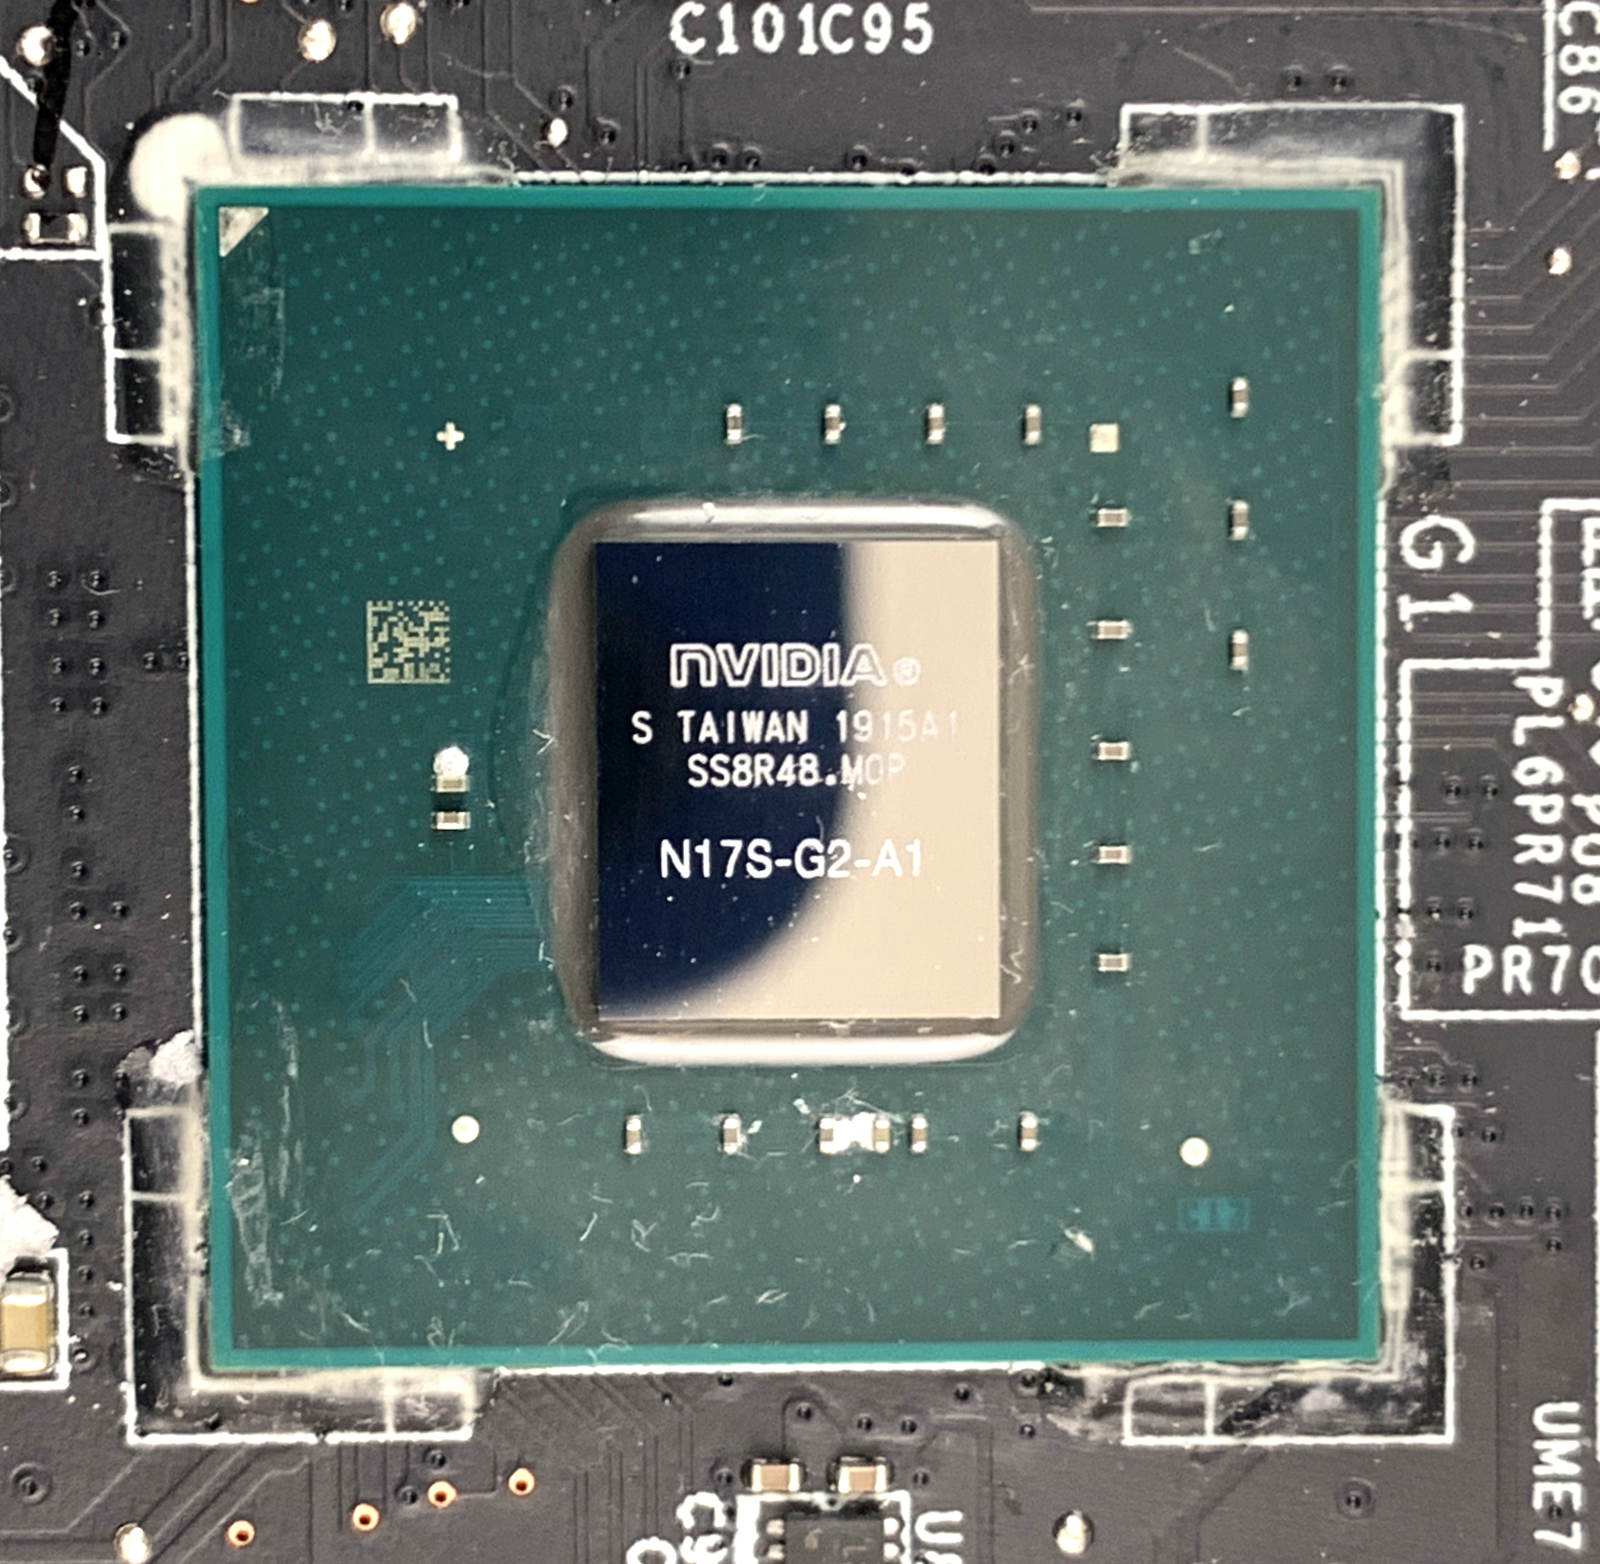 Nvidia Geforce Mx250 Graphics Card Notebookcheck Net Tech